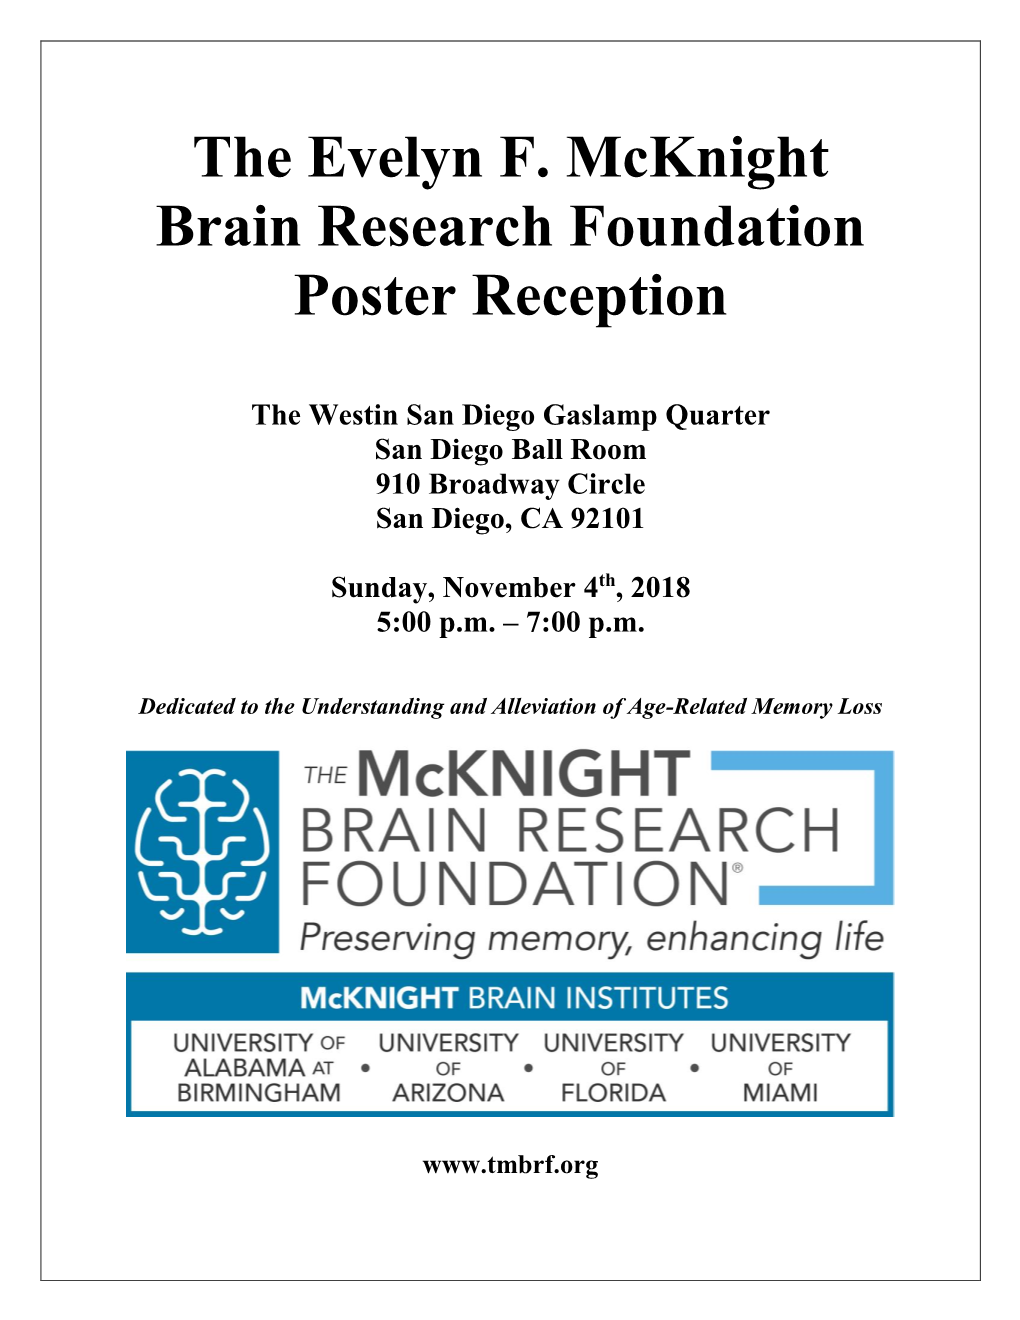 The Mcknight Brain Research Foundation